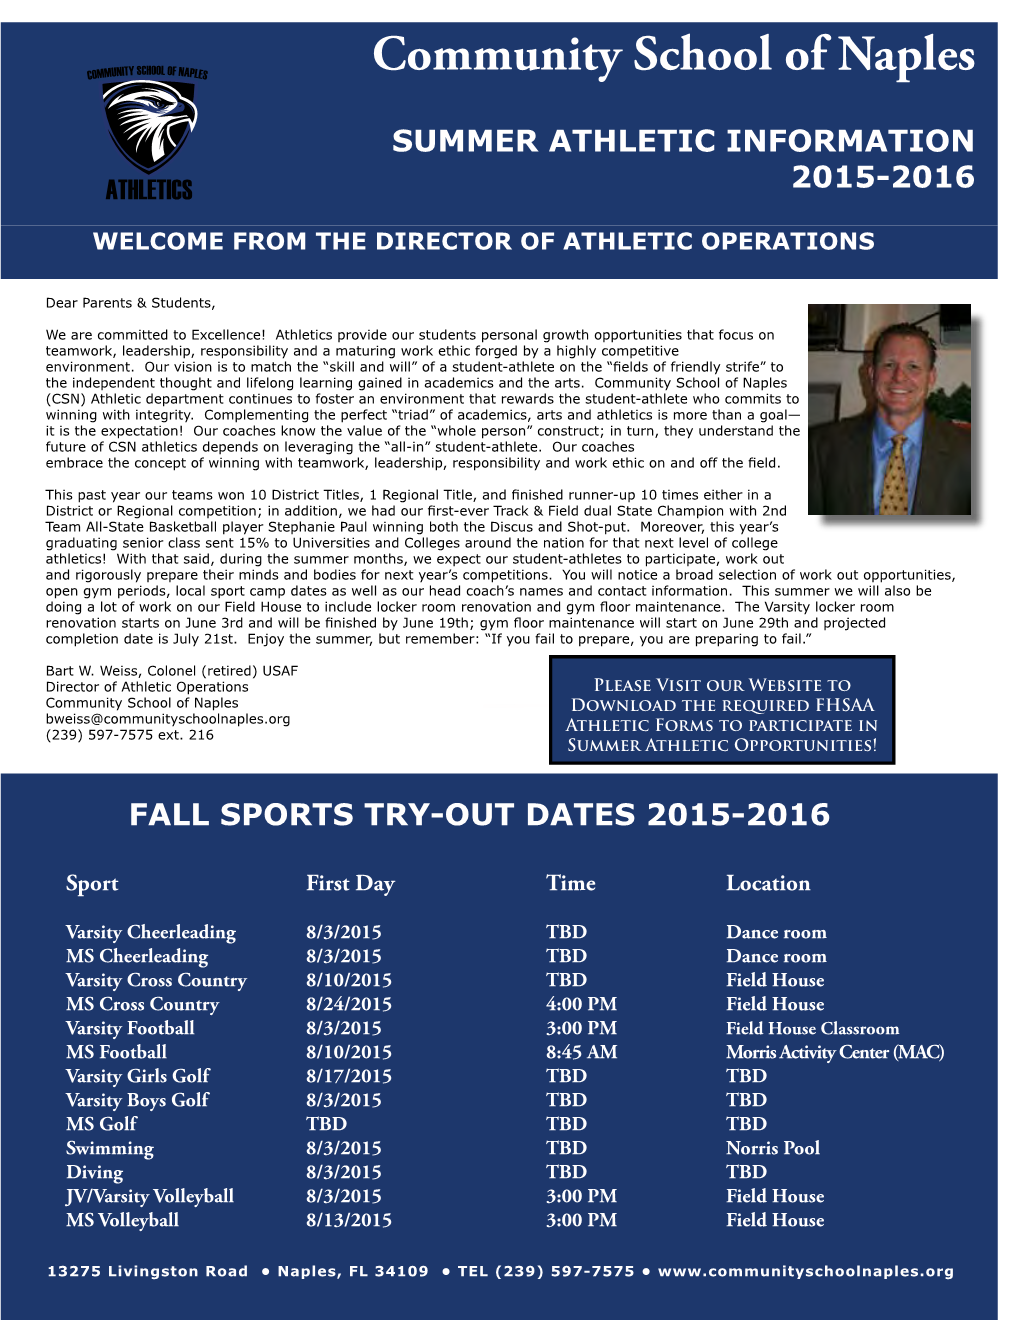 Summer Athletic Information 2015-2016